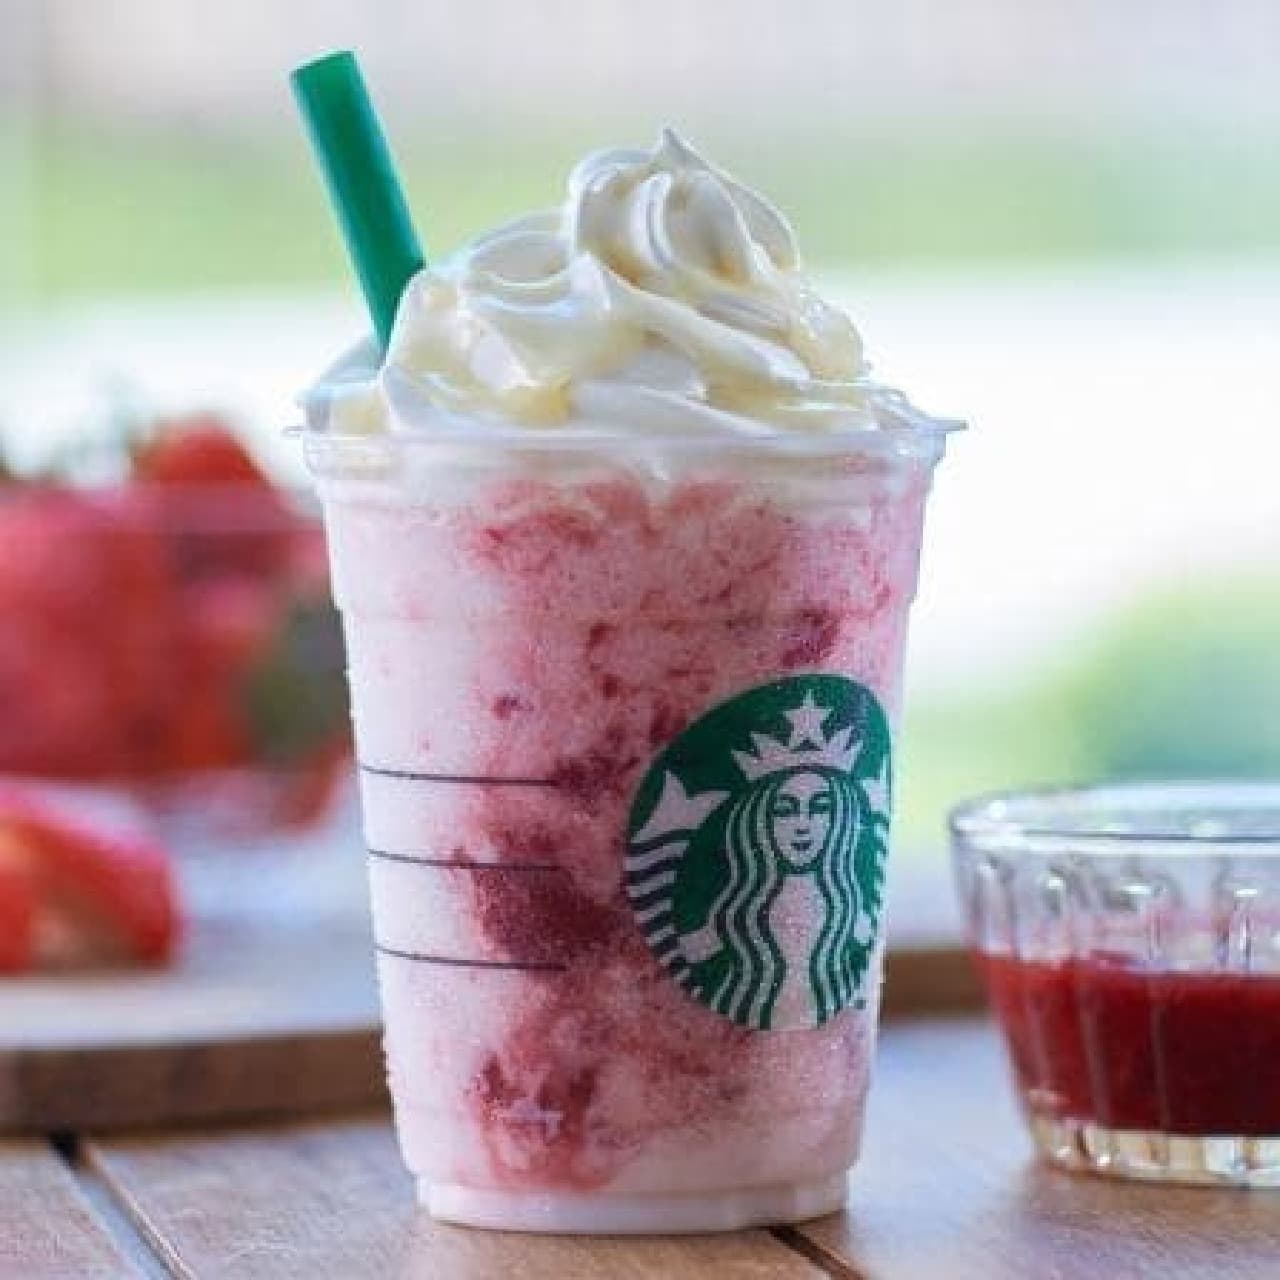 Starbucks "Strawberry & White Chocolate Frappuccino"